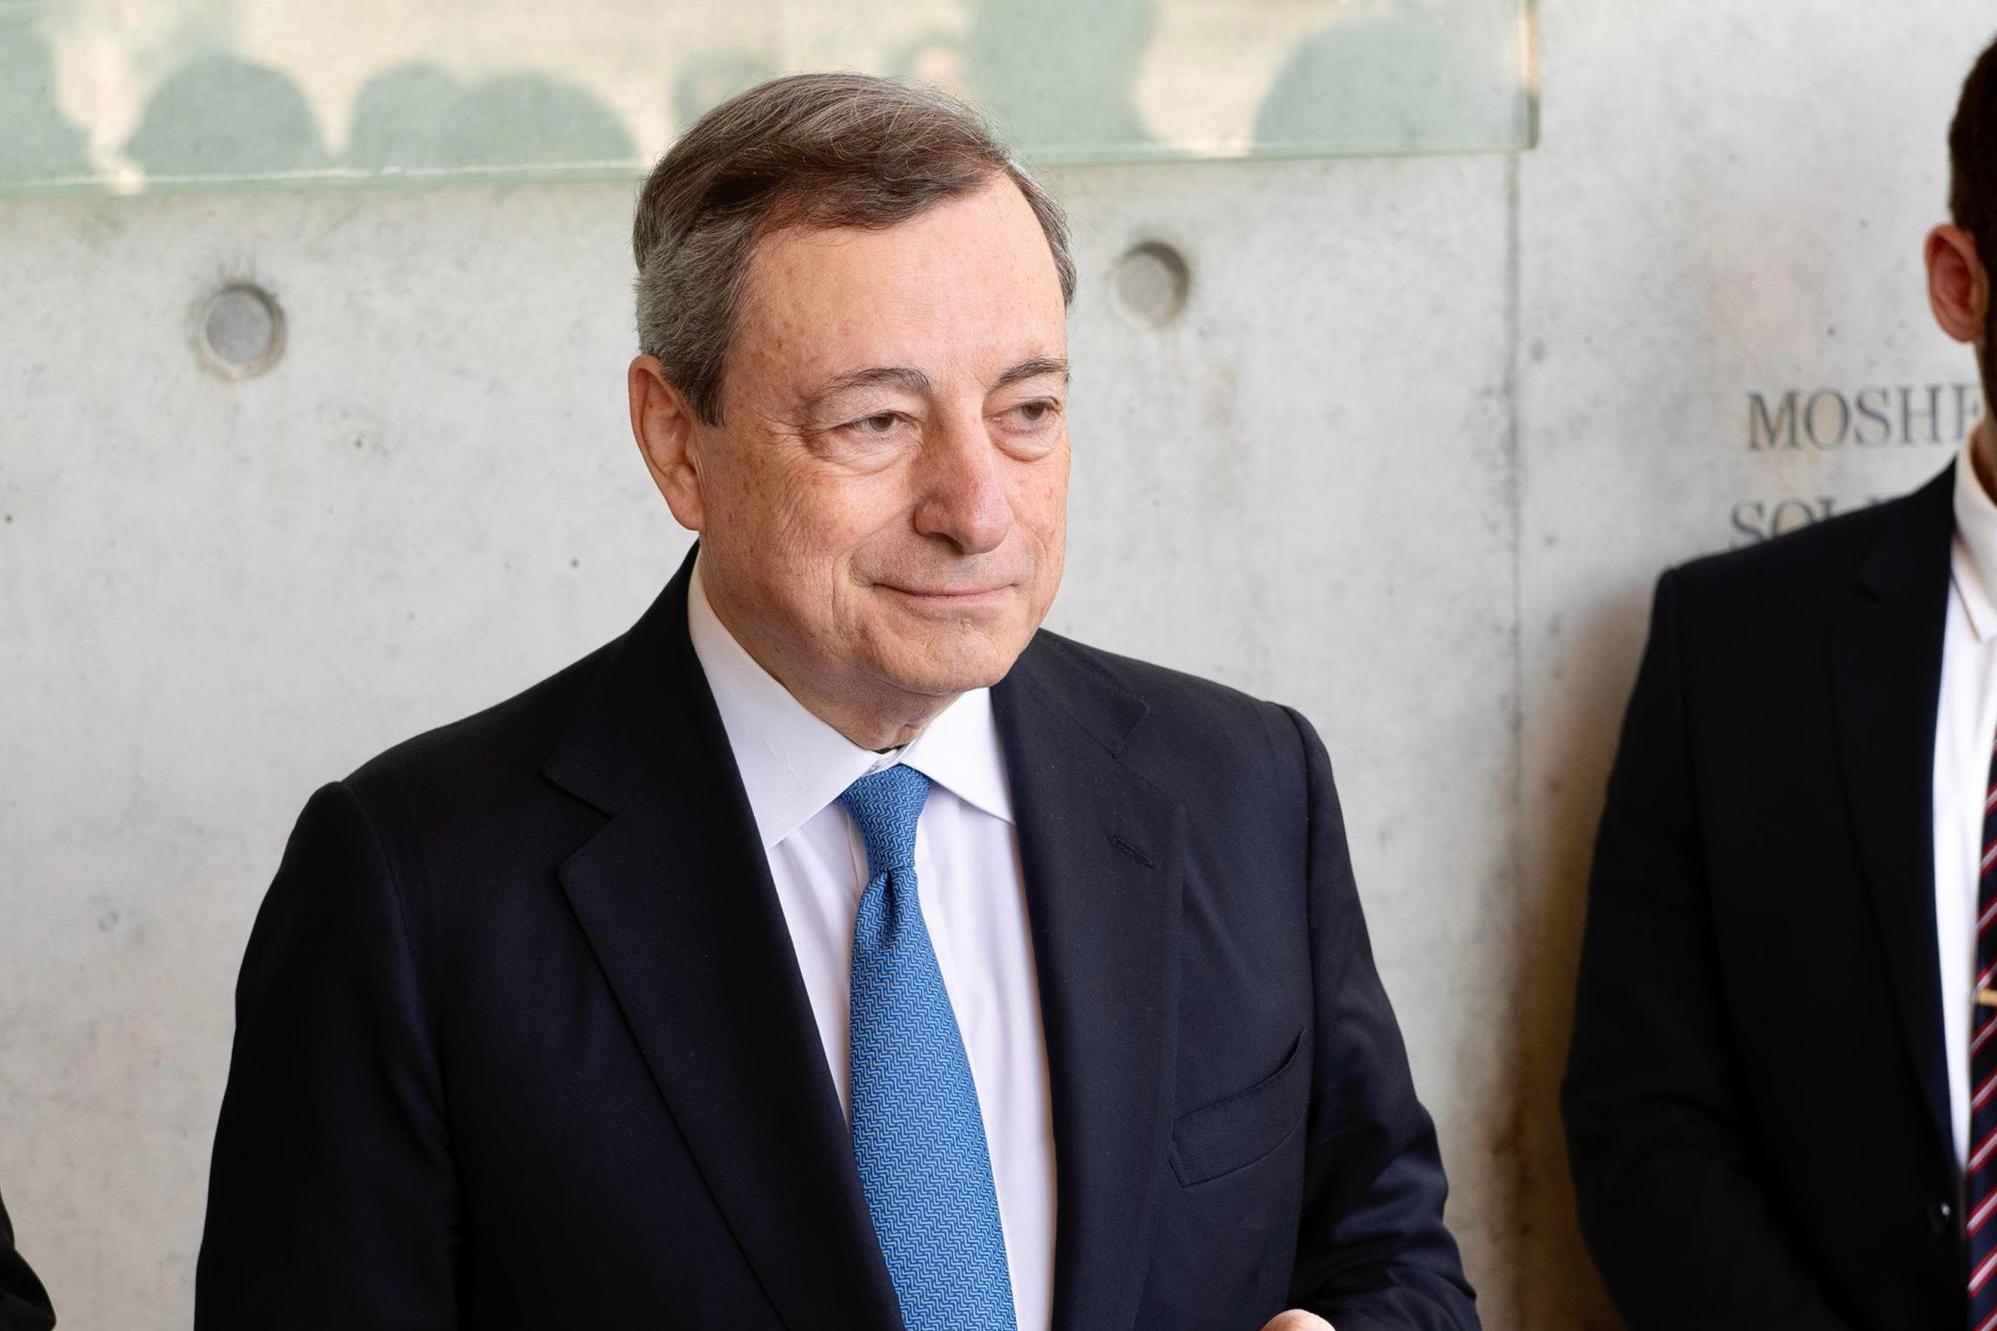 Mario Draghi (Ansa)